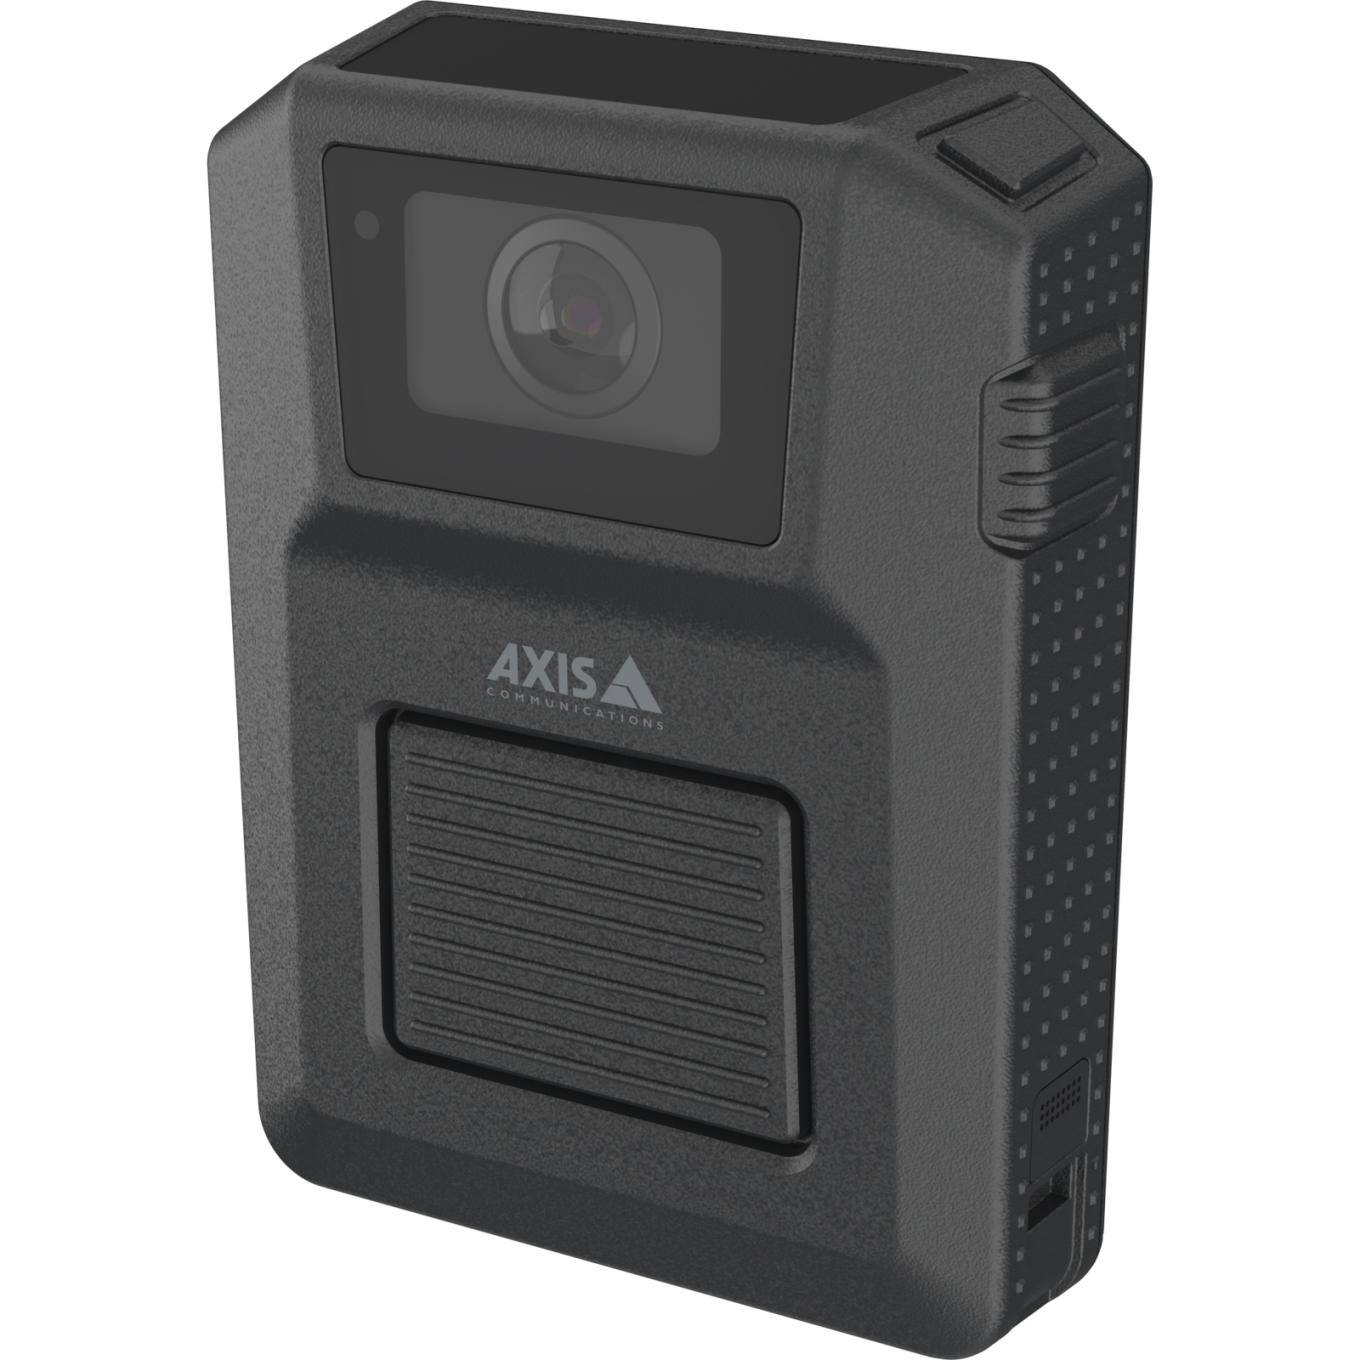 AXIS W102 Body Worn Camera de couleur noire, vue de son angle gauche